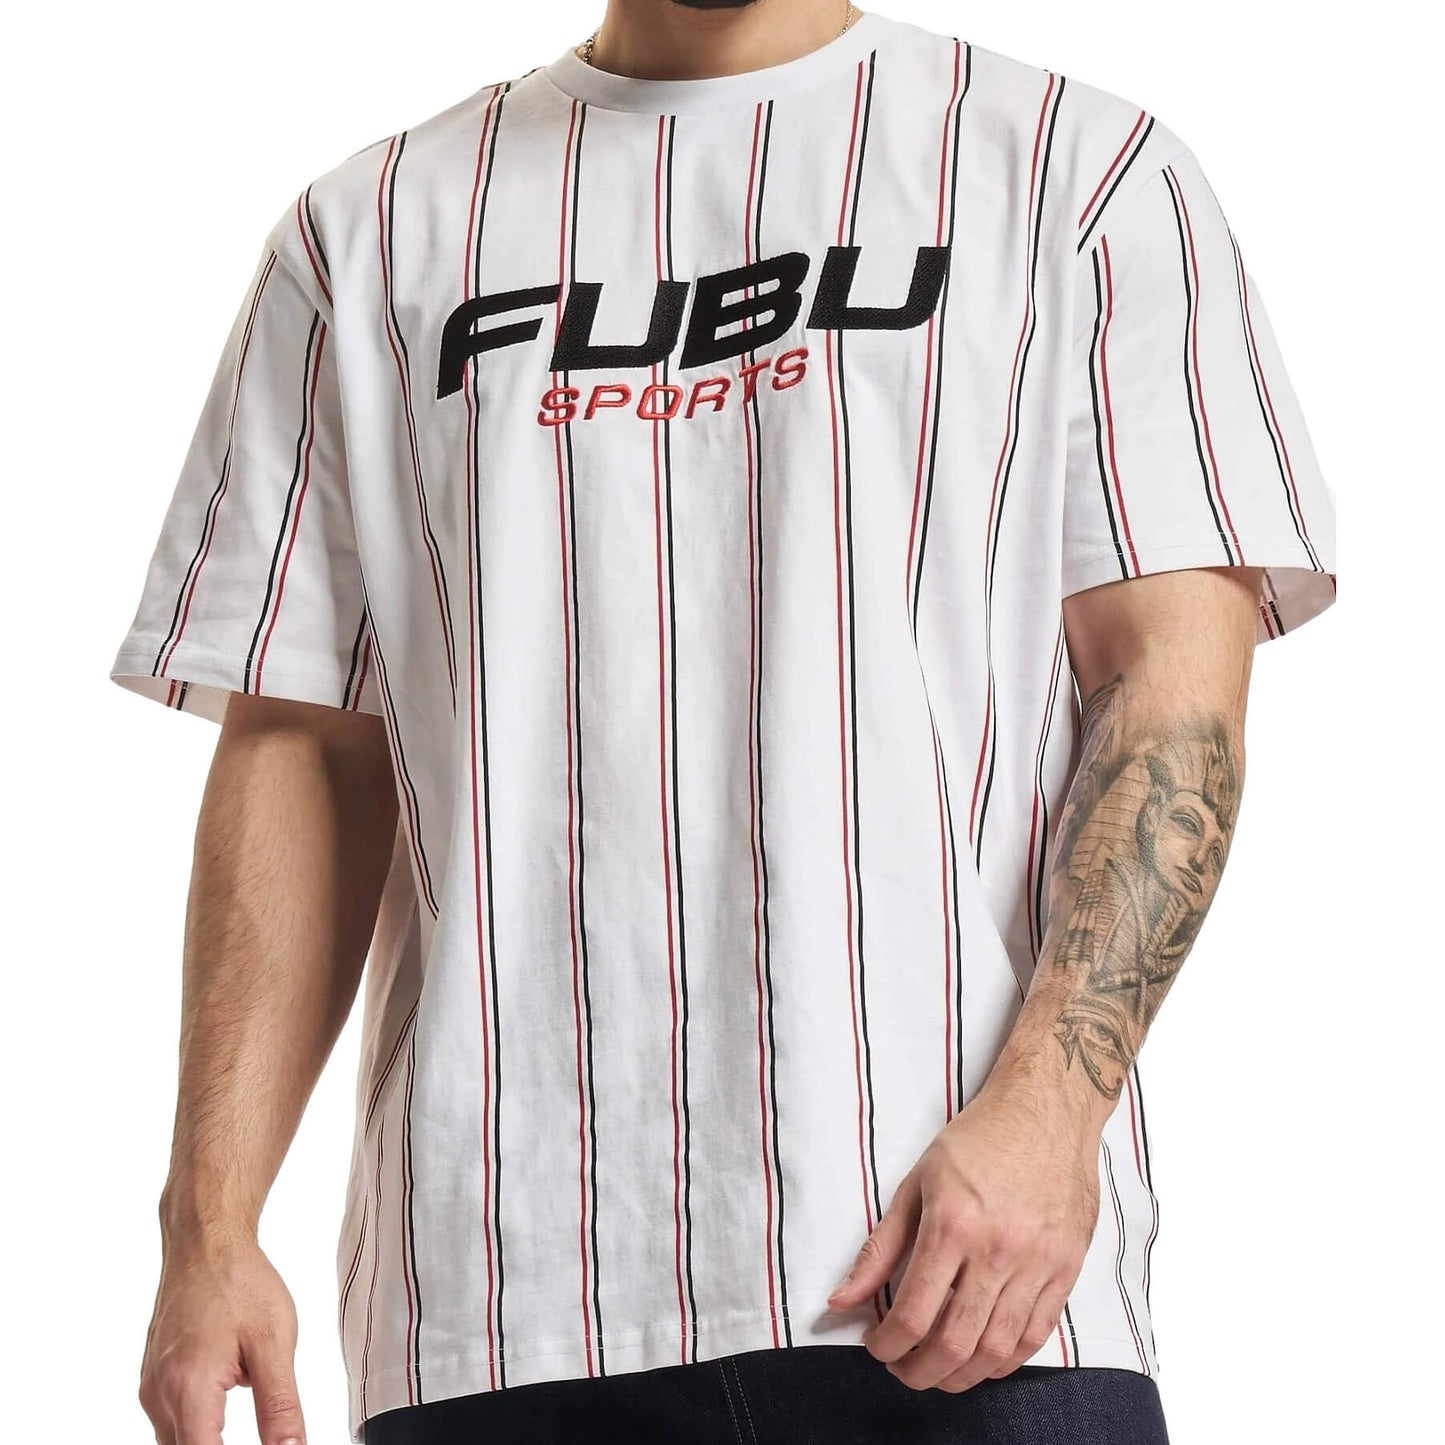 FUBU Corporate Sprts Pinstripe Tee white/black/red white